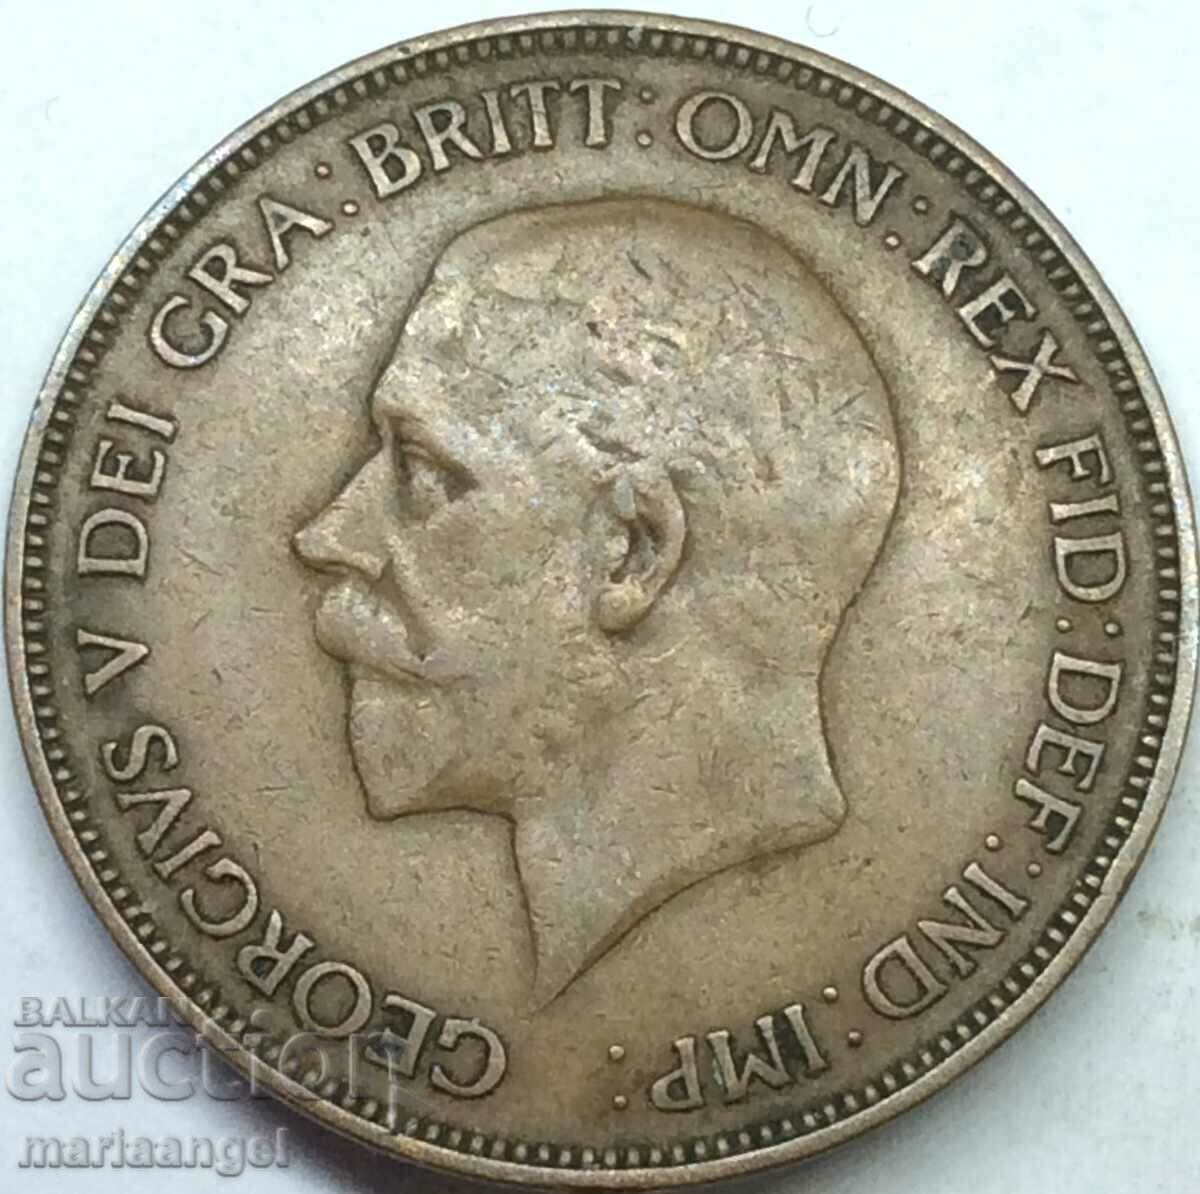 Marea Britanie 1 penny 1935 30mm bronz